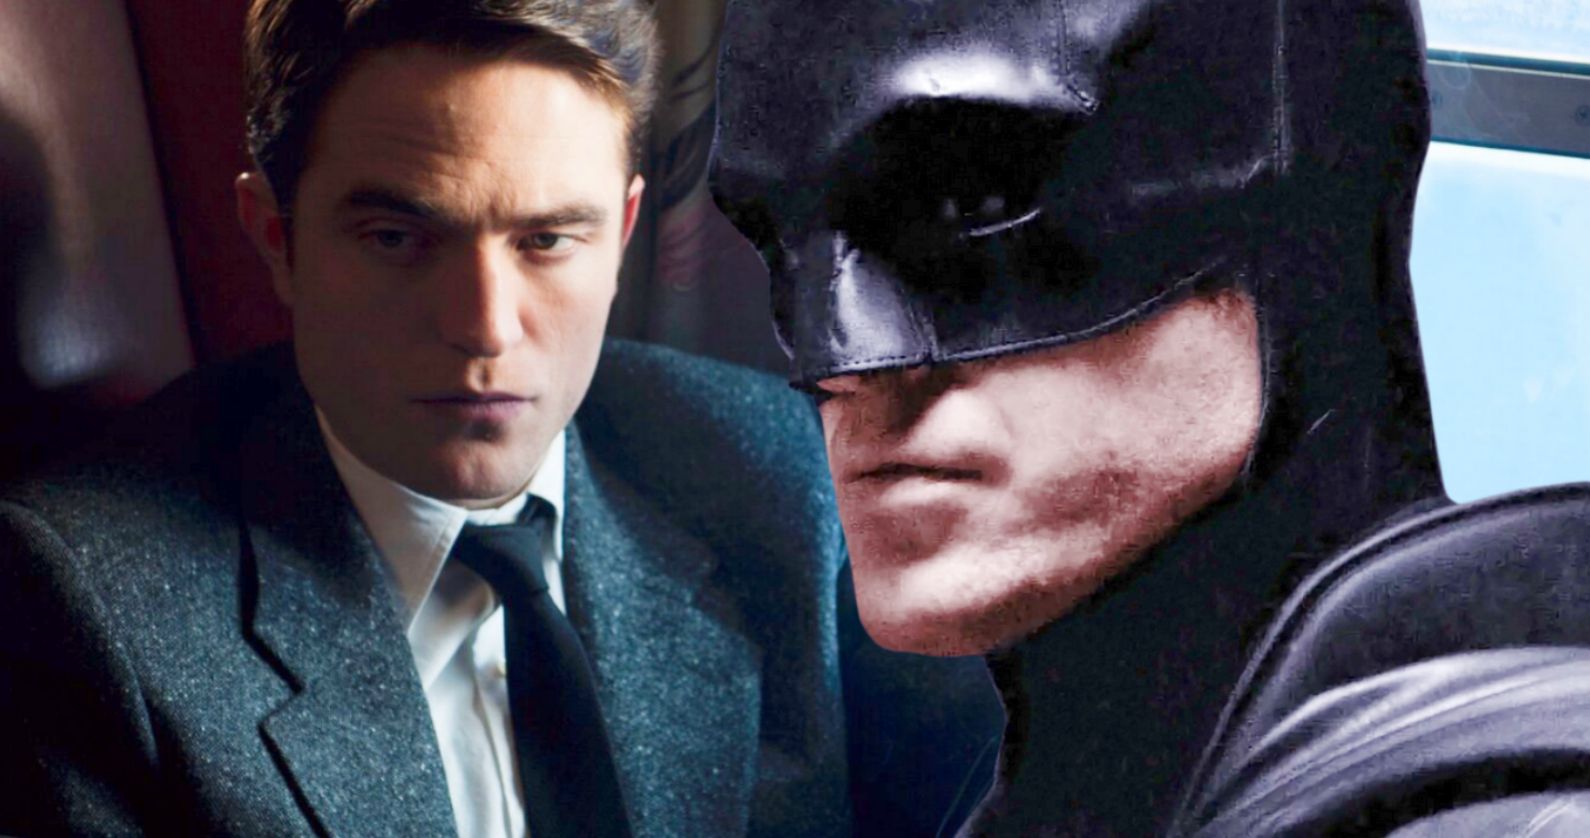 The Batman as James Bond? Robert Pattinson's 007 Odds Just Improved